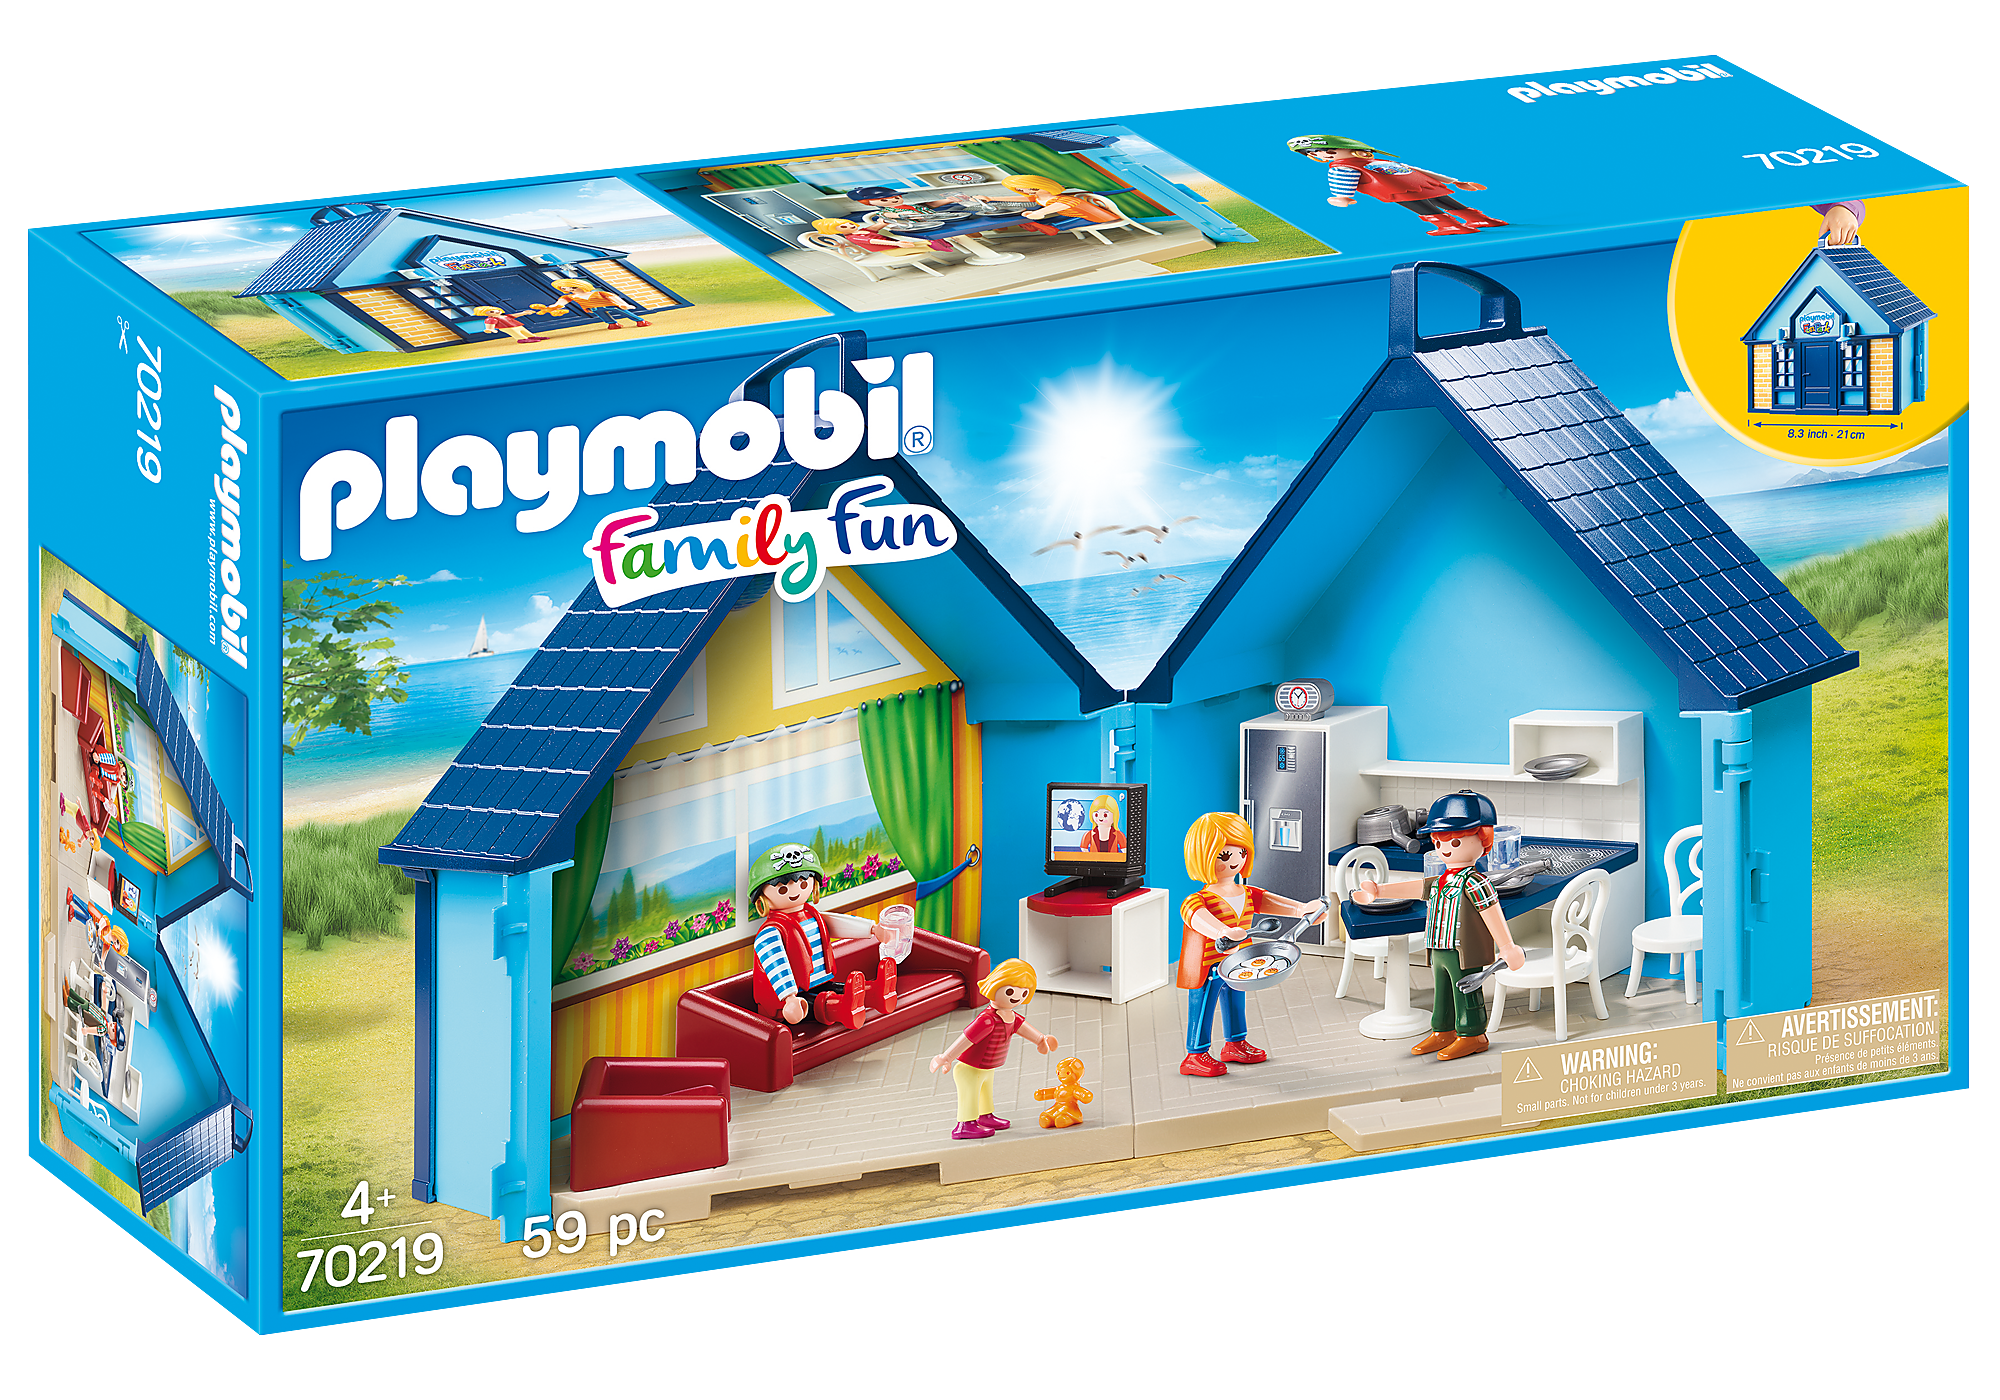 Summerhouse Playbox - 70219 |